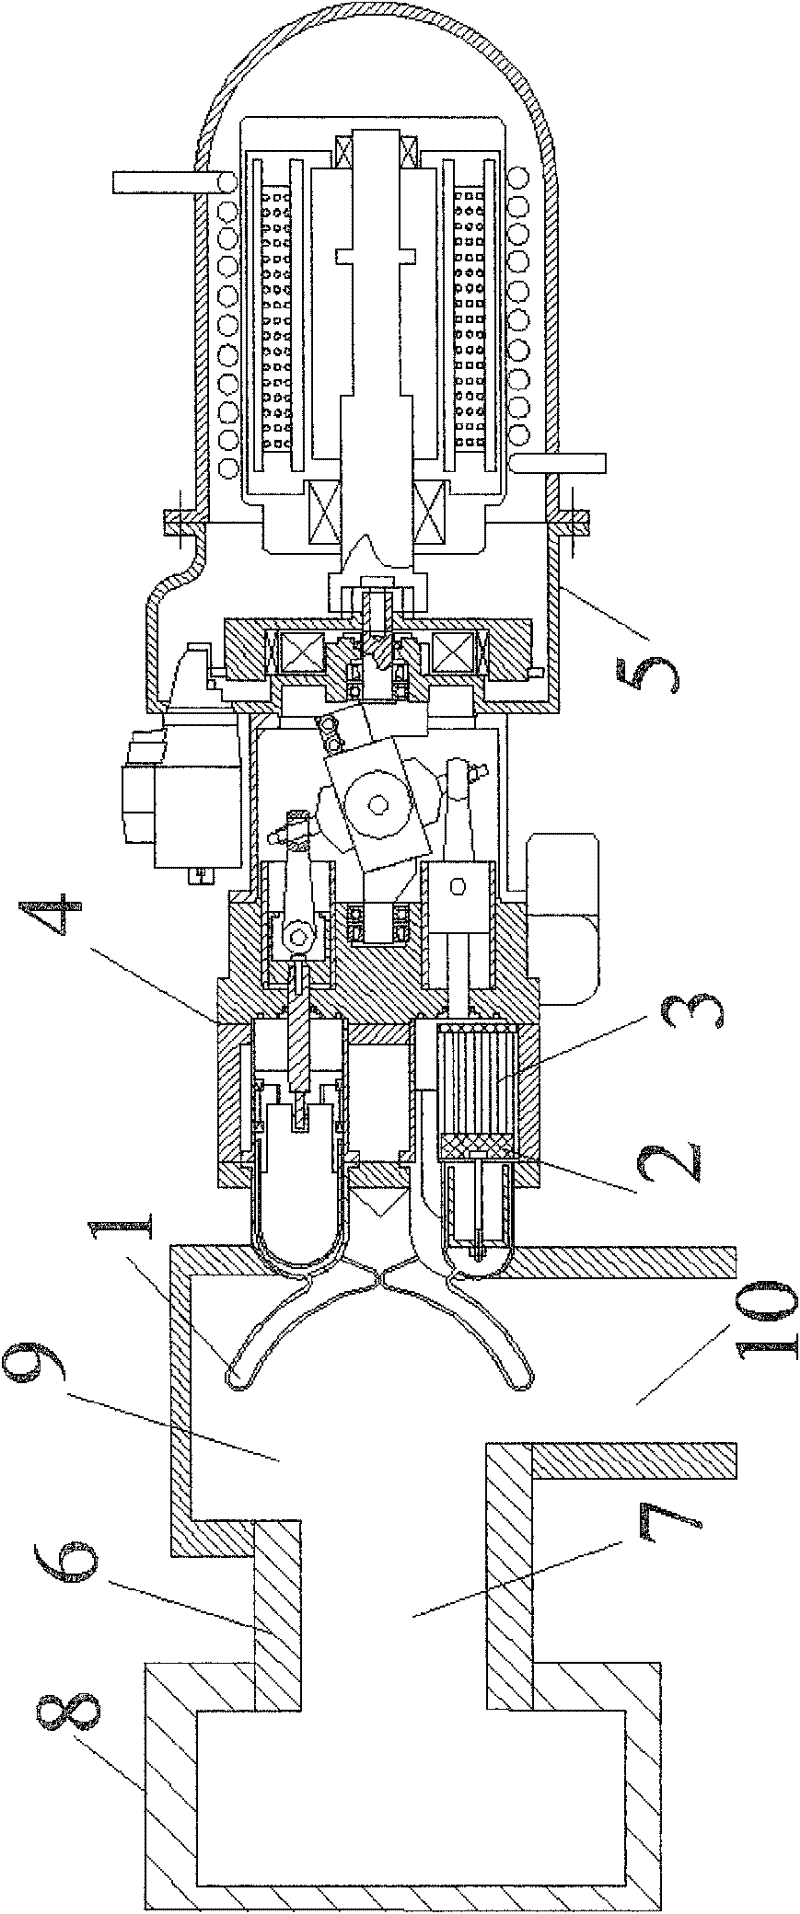 Waste heat power generation method of Stirling engine